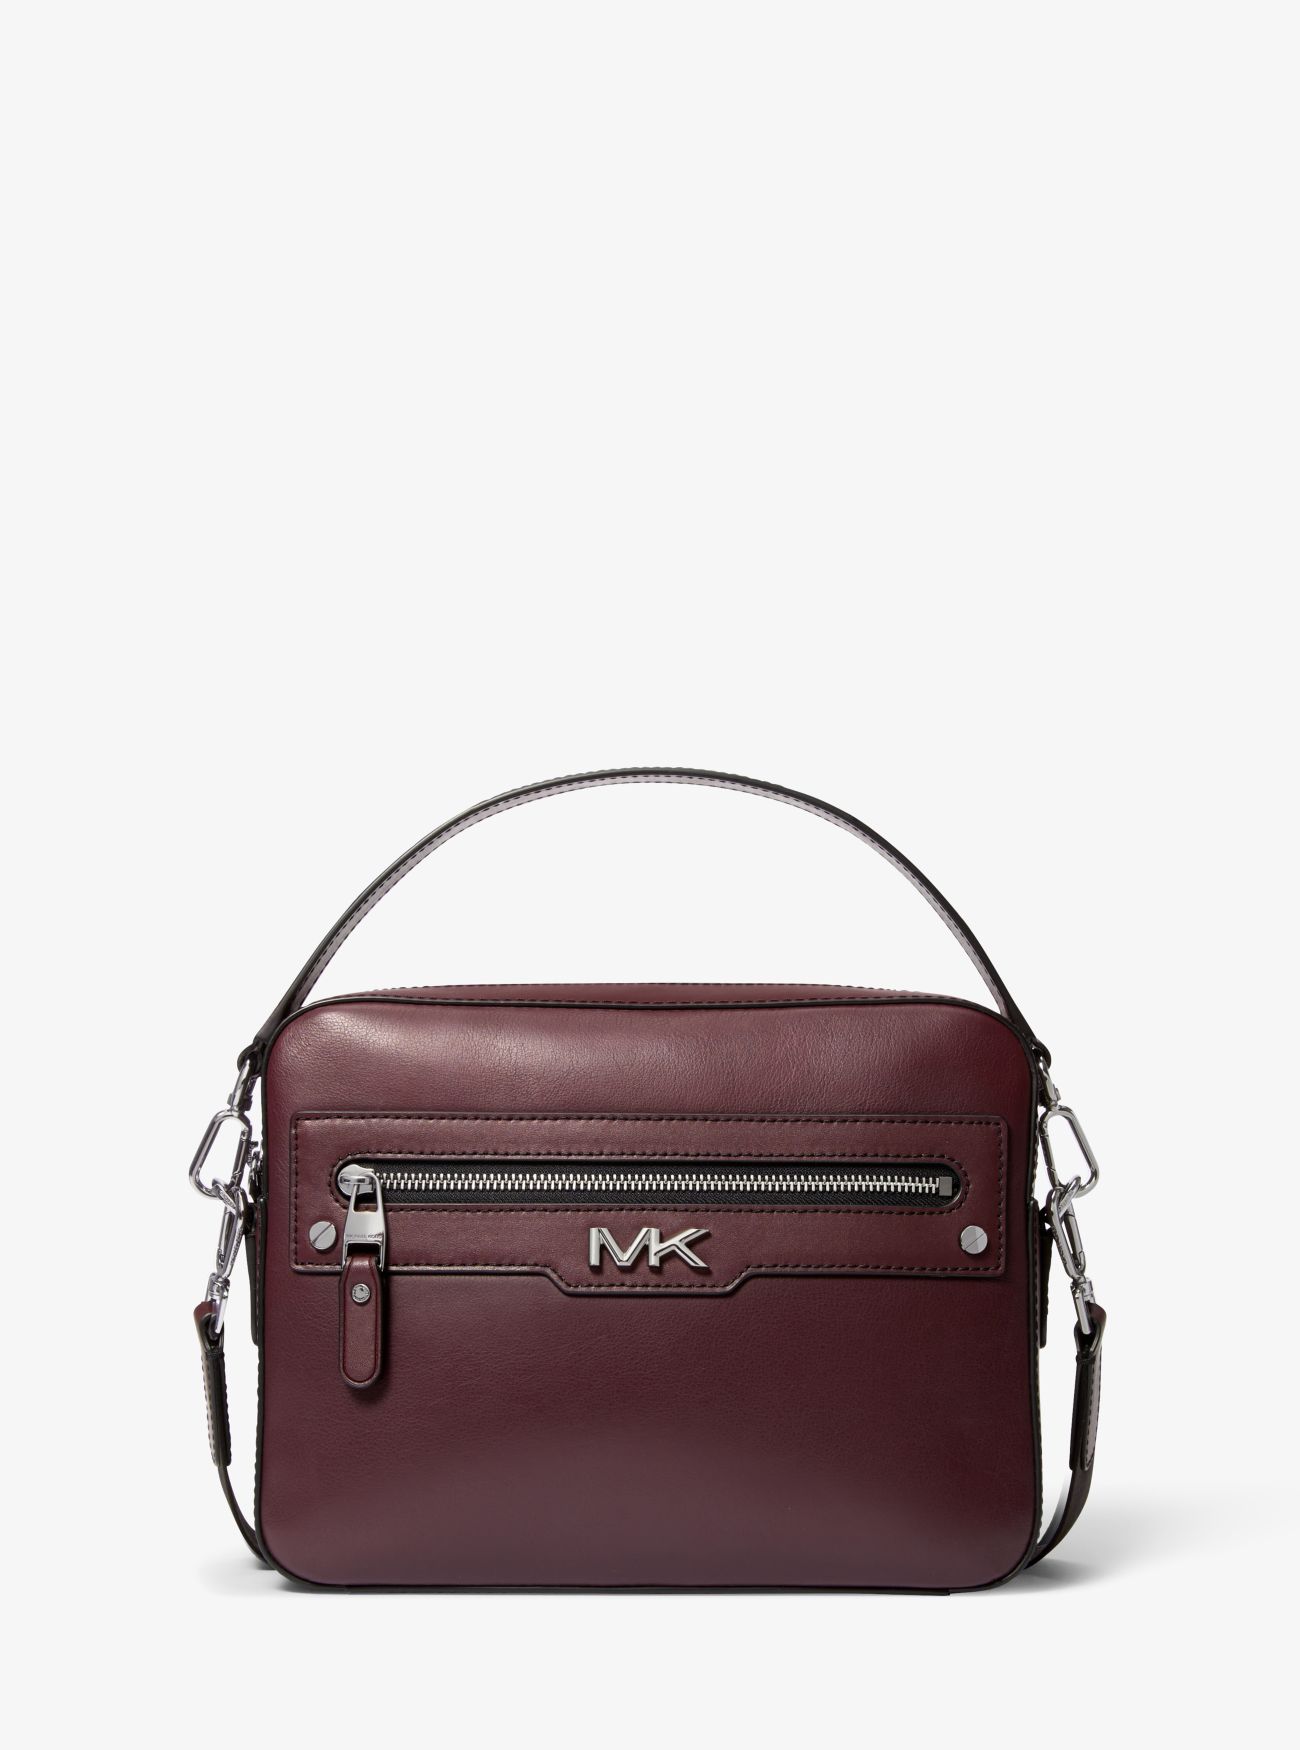 MK Varick Leather Camera Bag - Red - Michael Kors